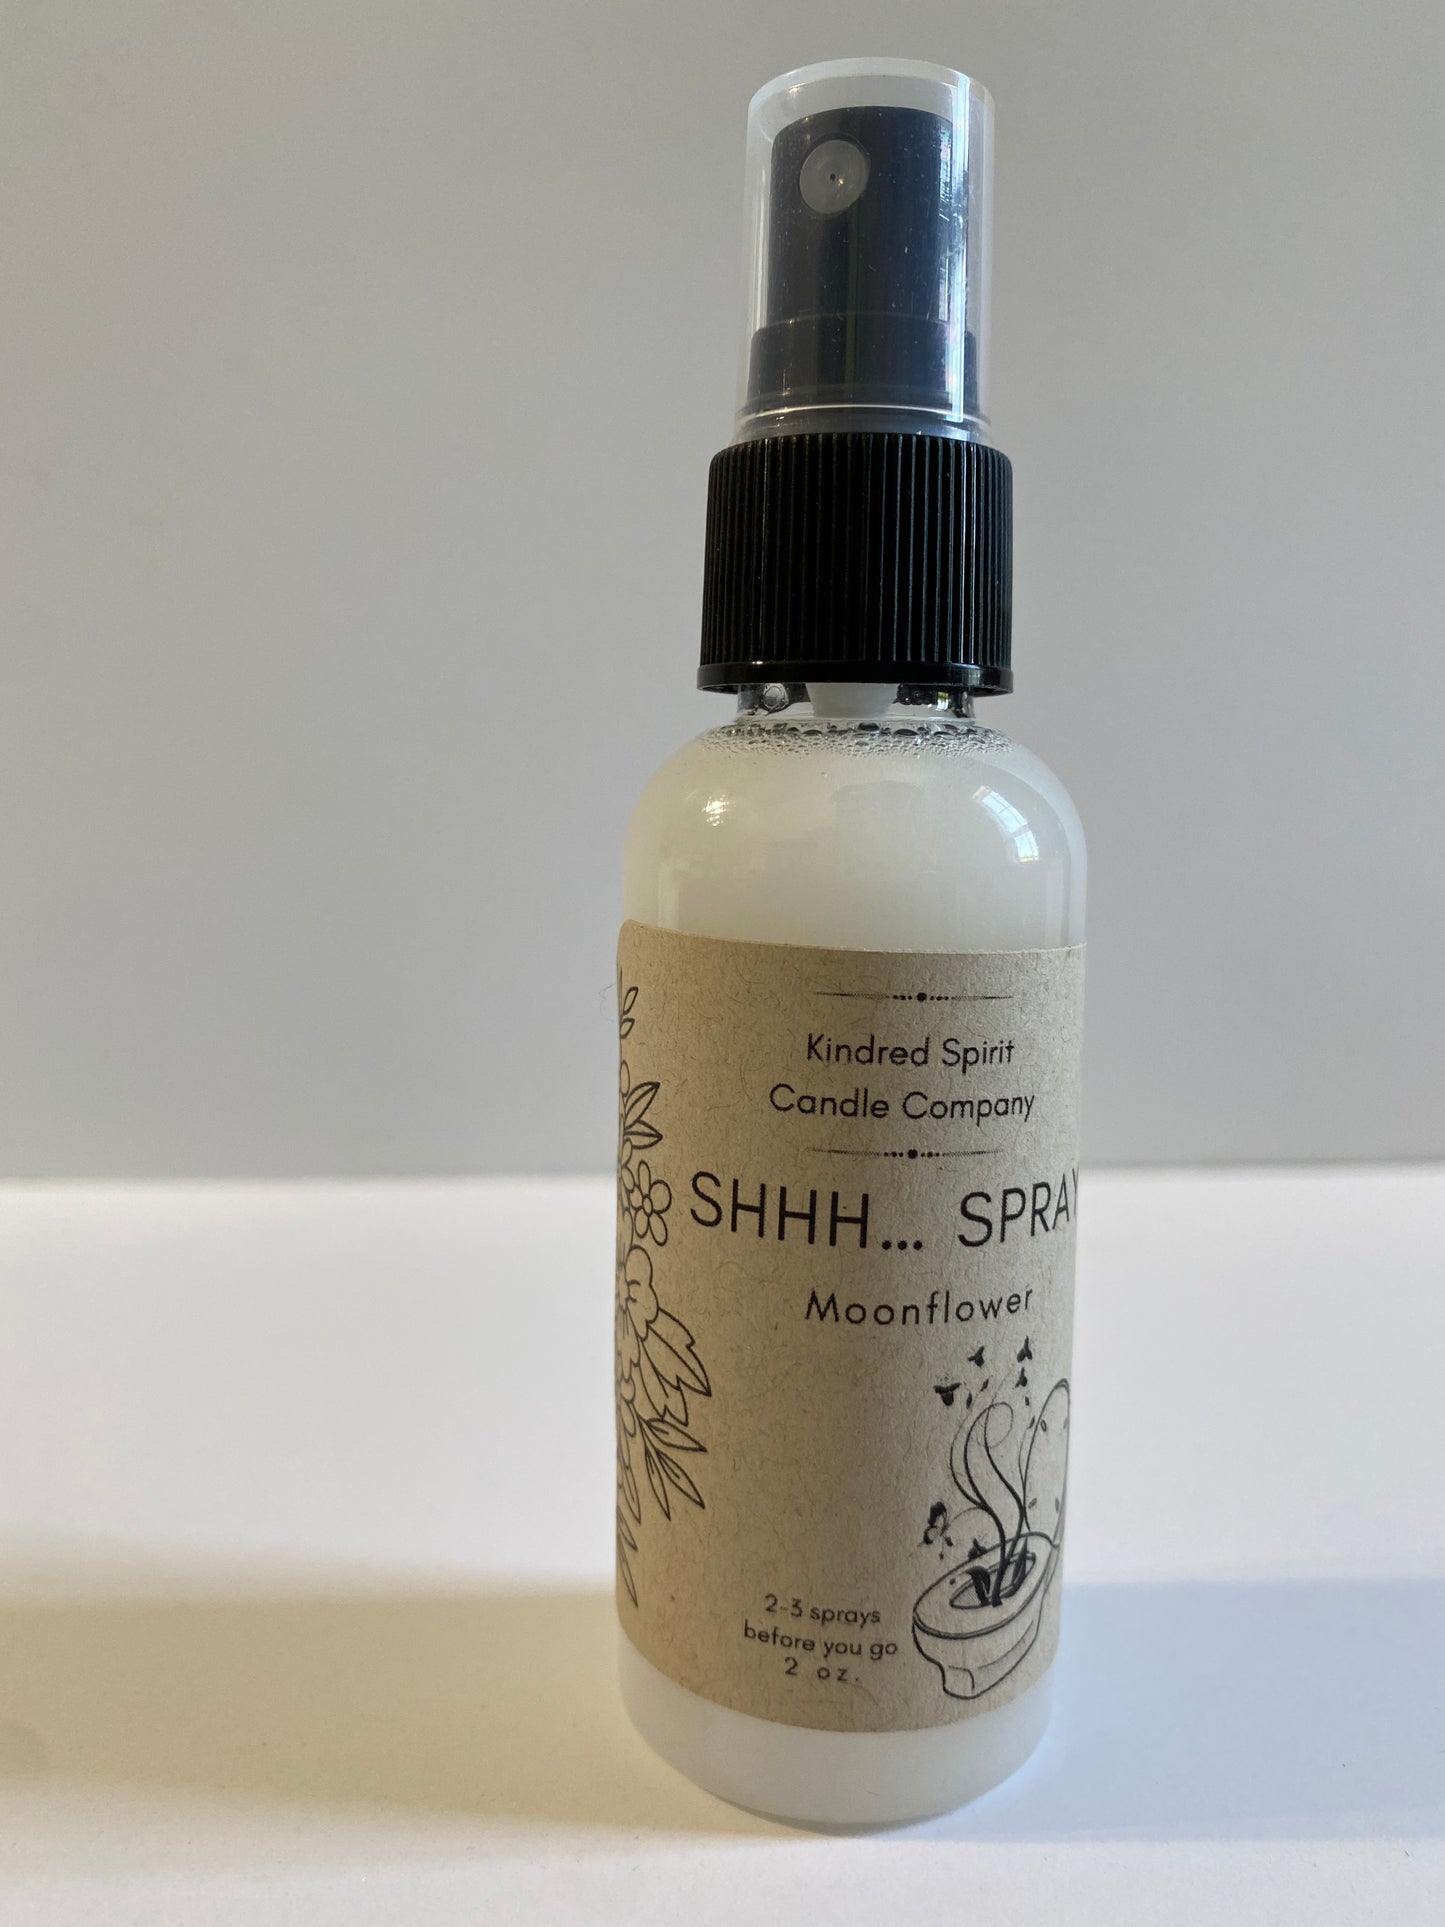 Shhh. Spray - Kindred Spirit Candle Company